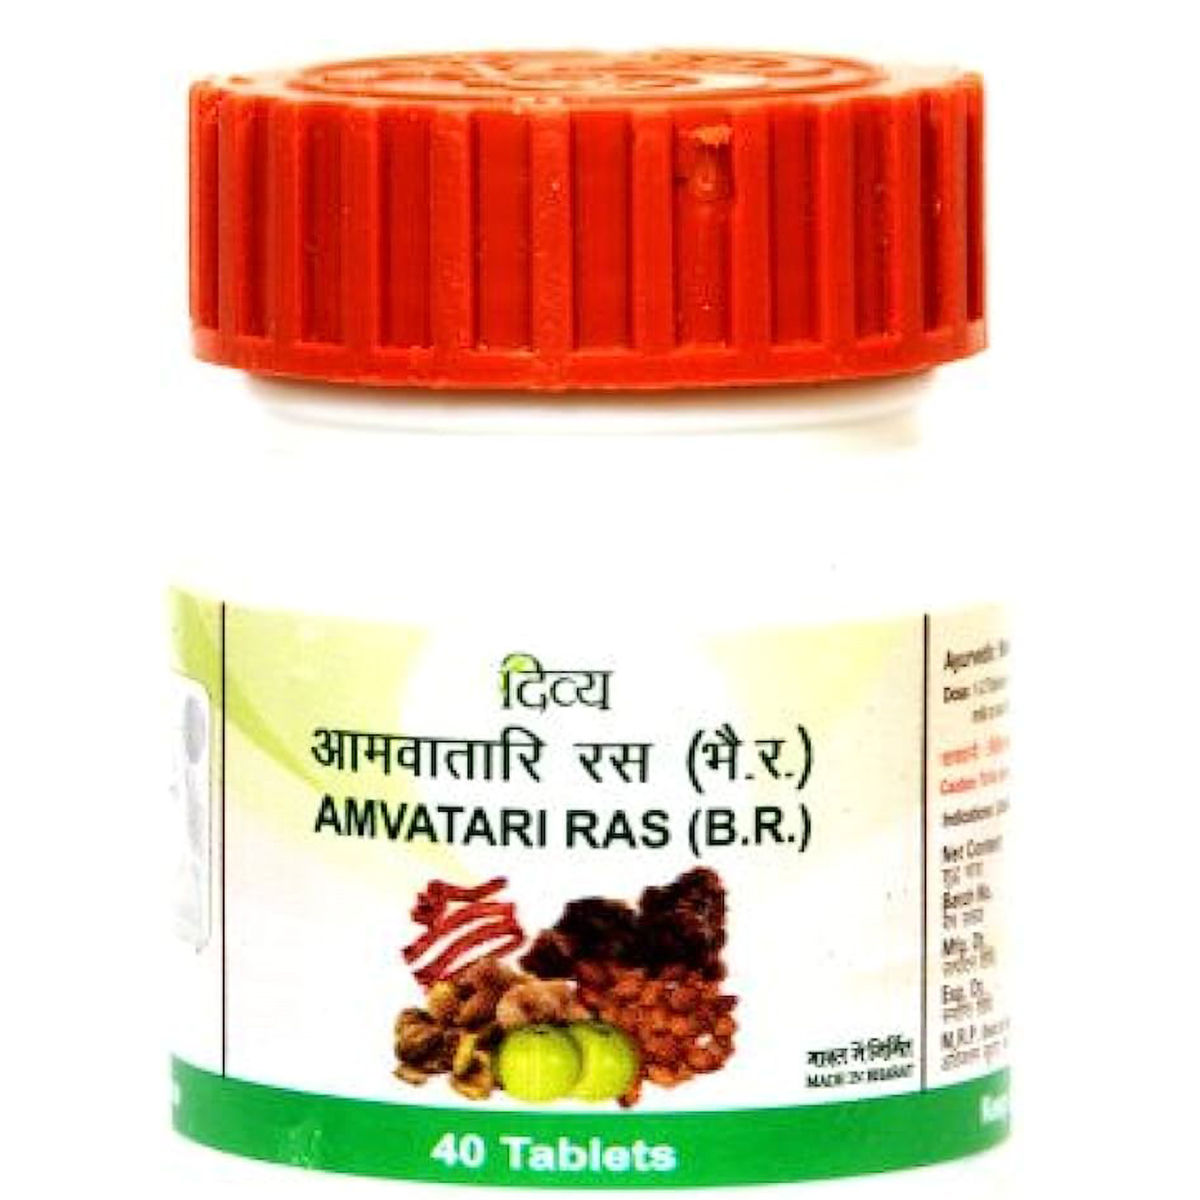 Buy Patanjali Divya Amvatari Ras, 40 Tablets Online